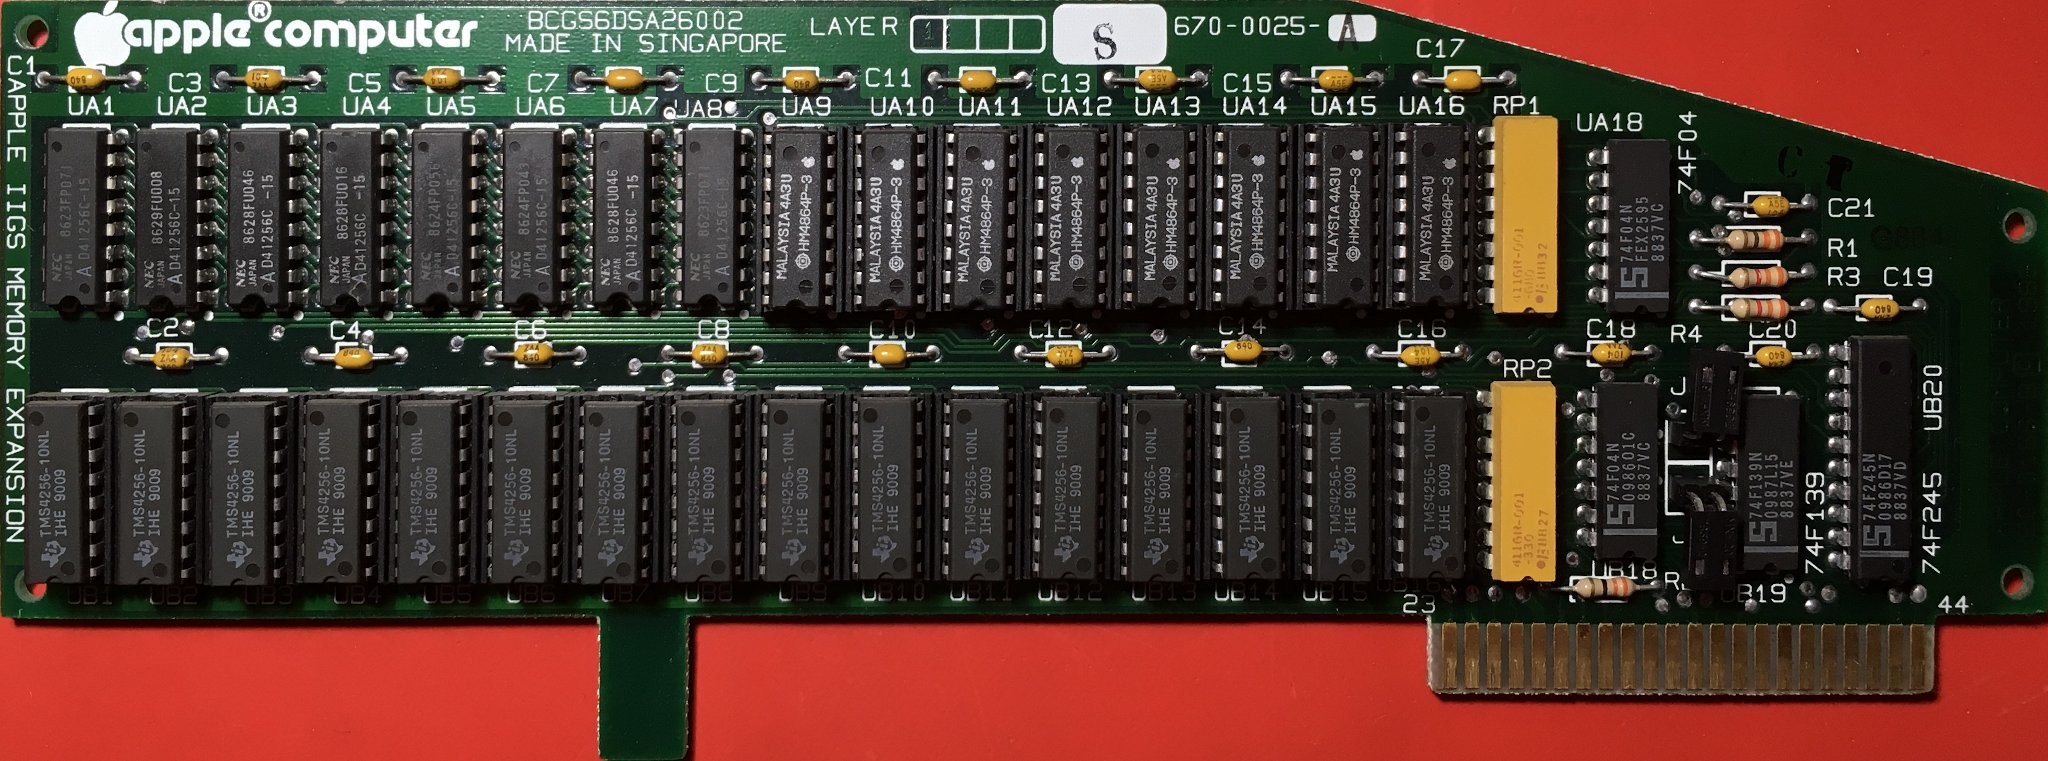 Apple IIGS memory expansion card